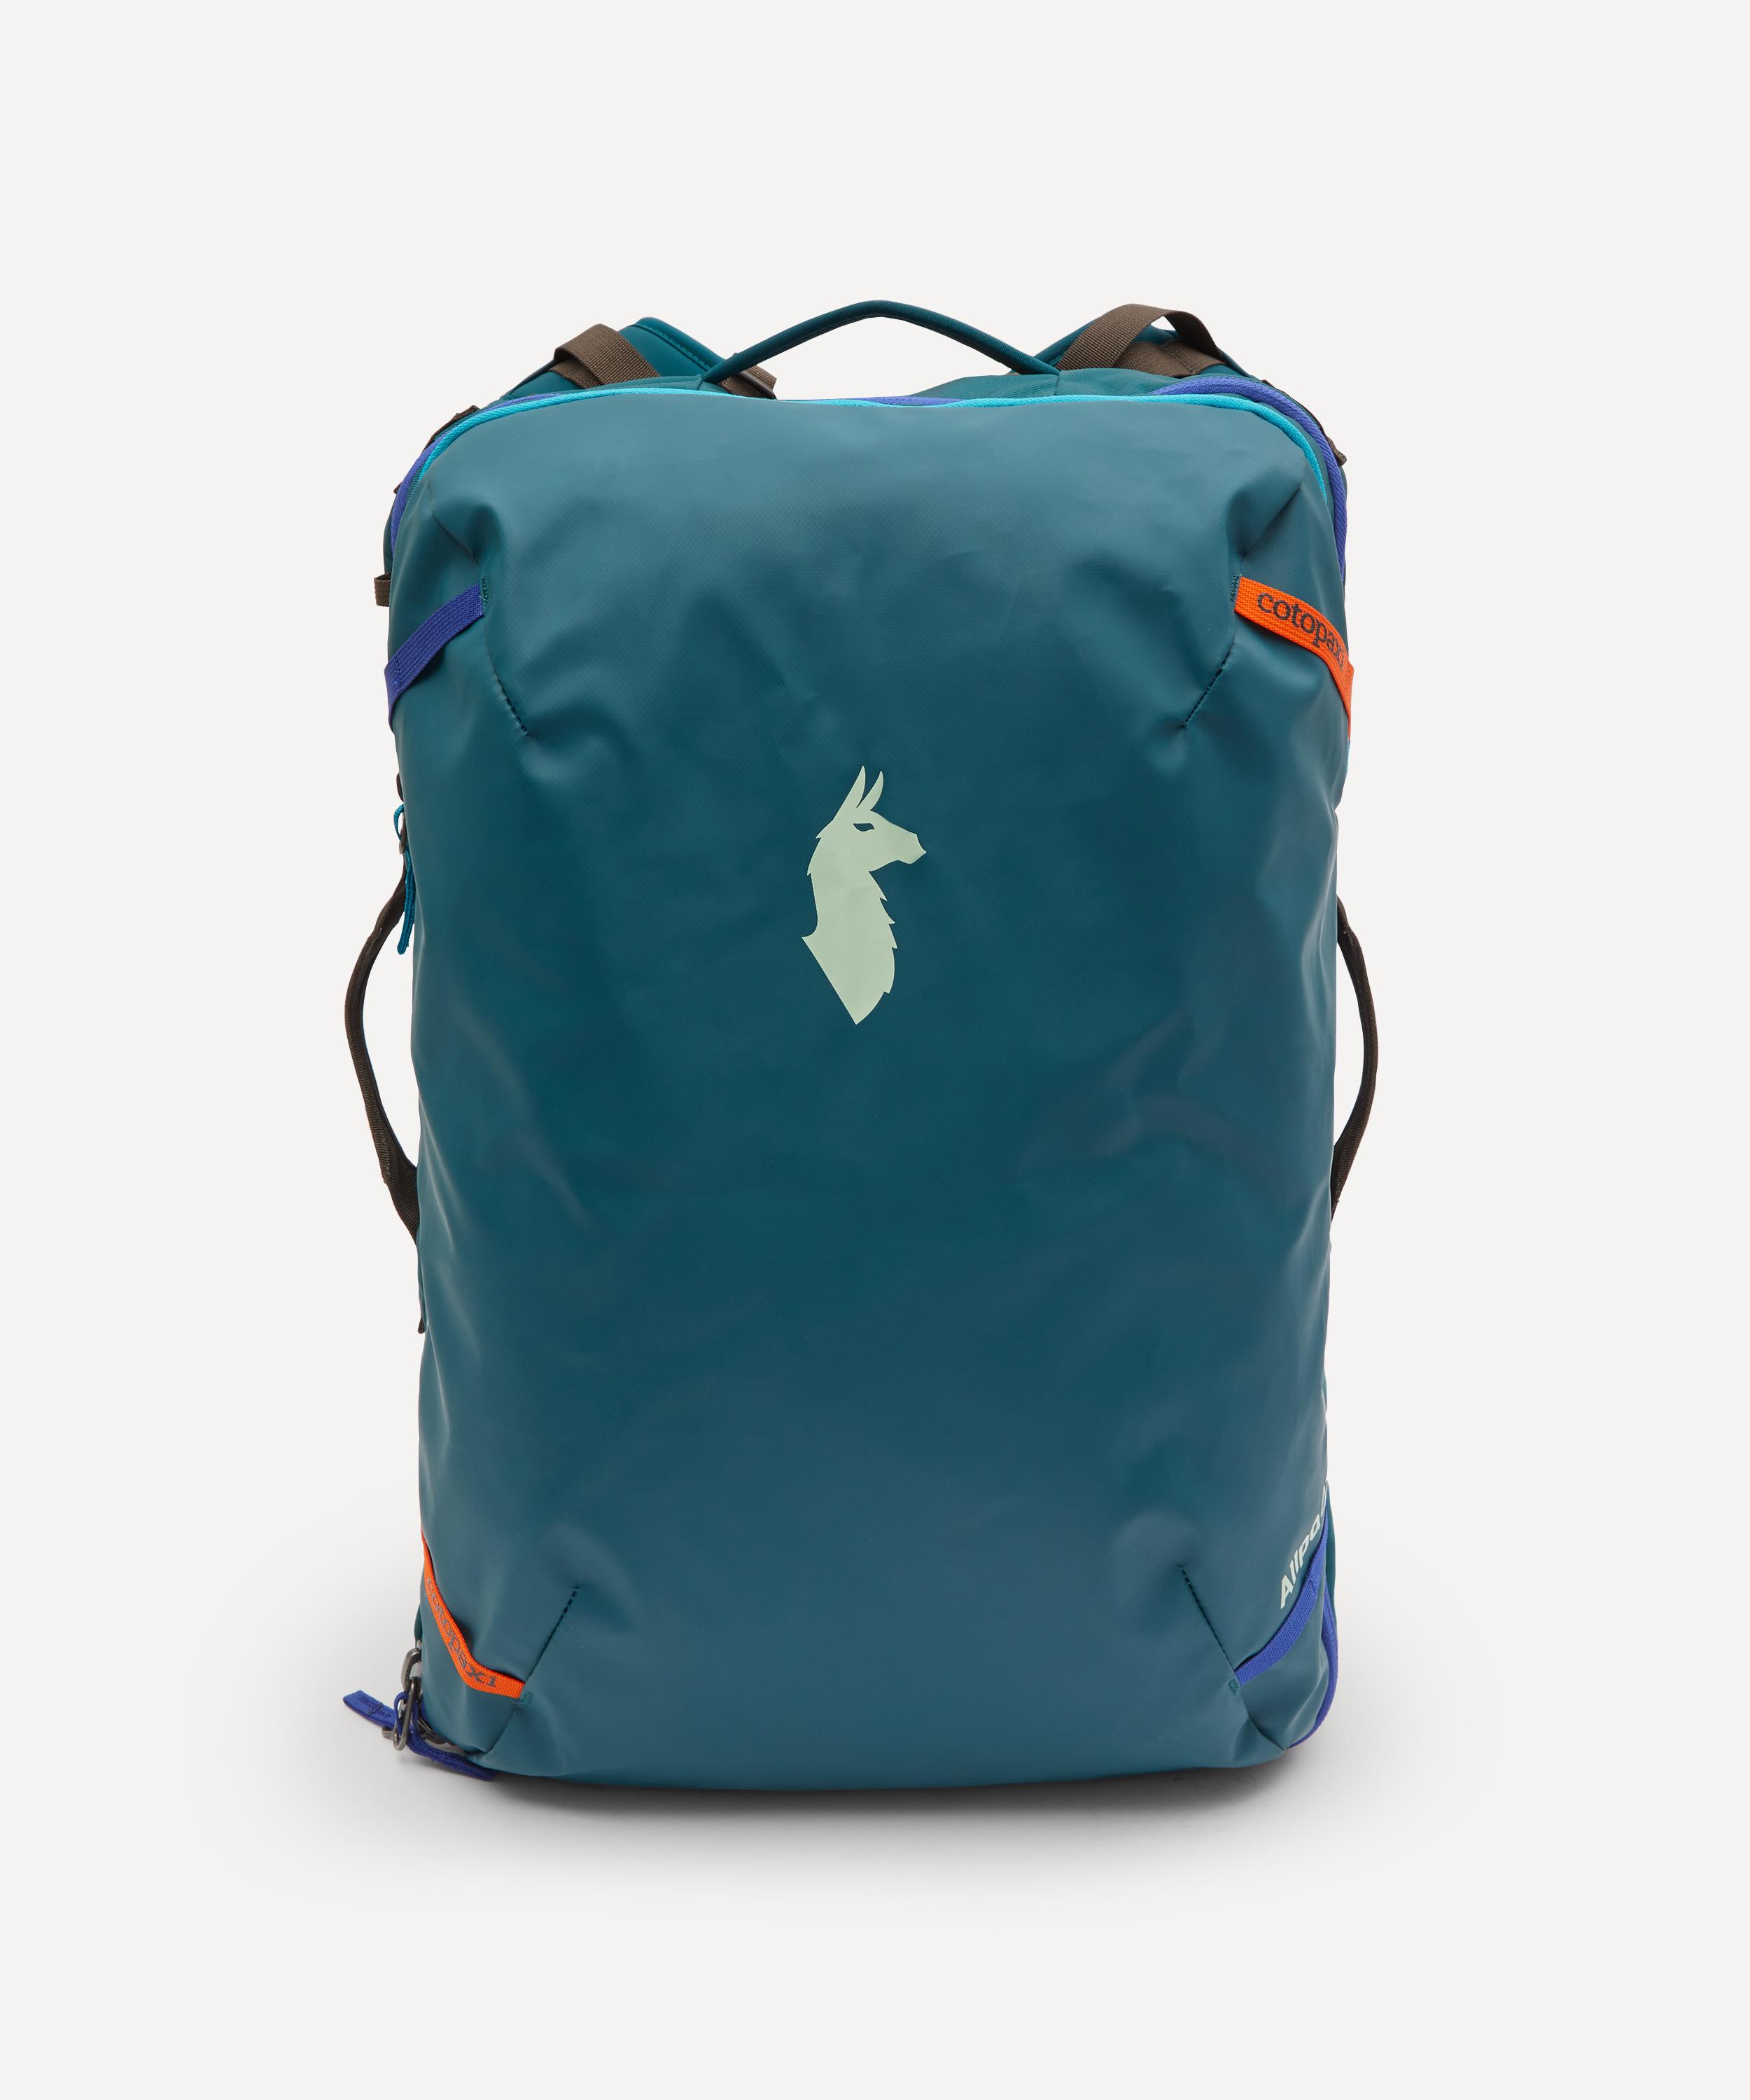 Cotopaxi Allpa 42L Travel Pack | Liberty